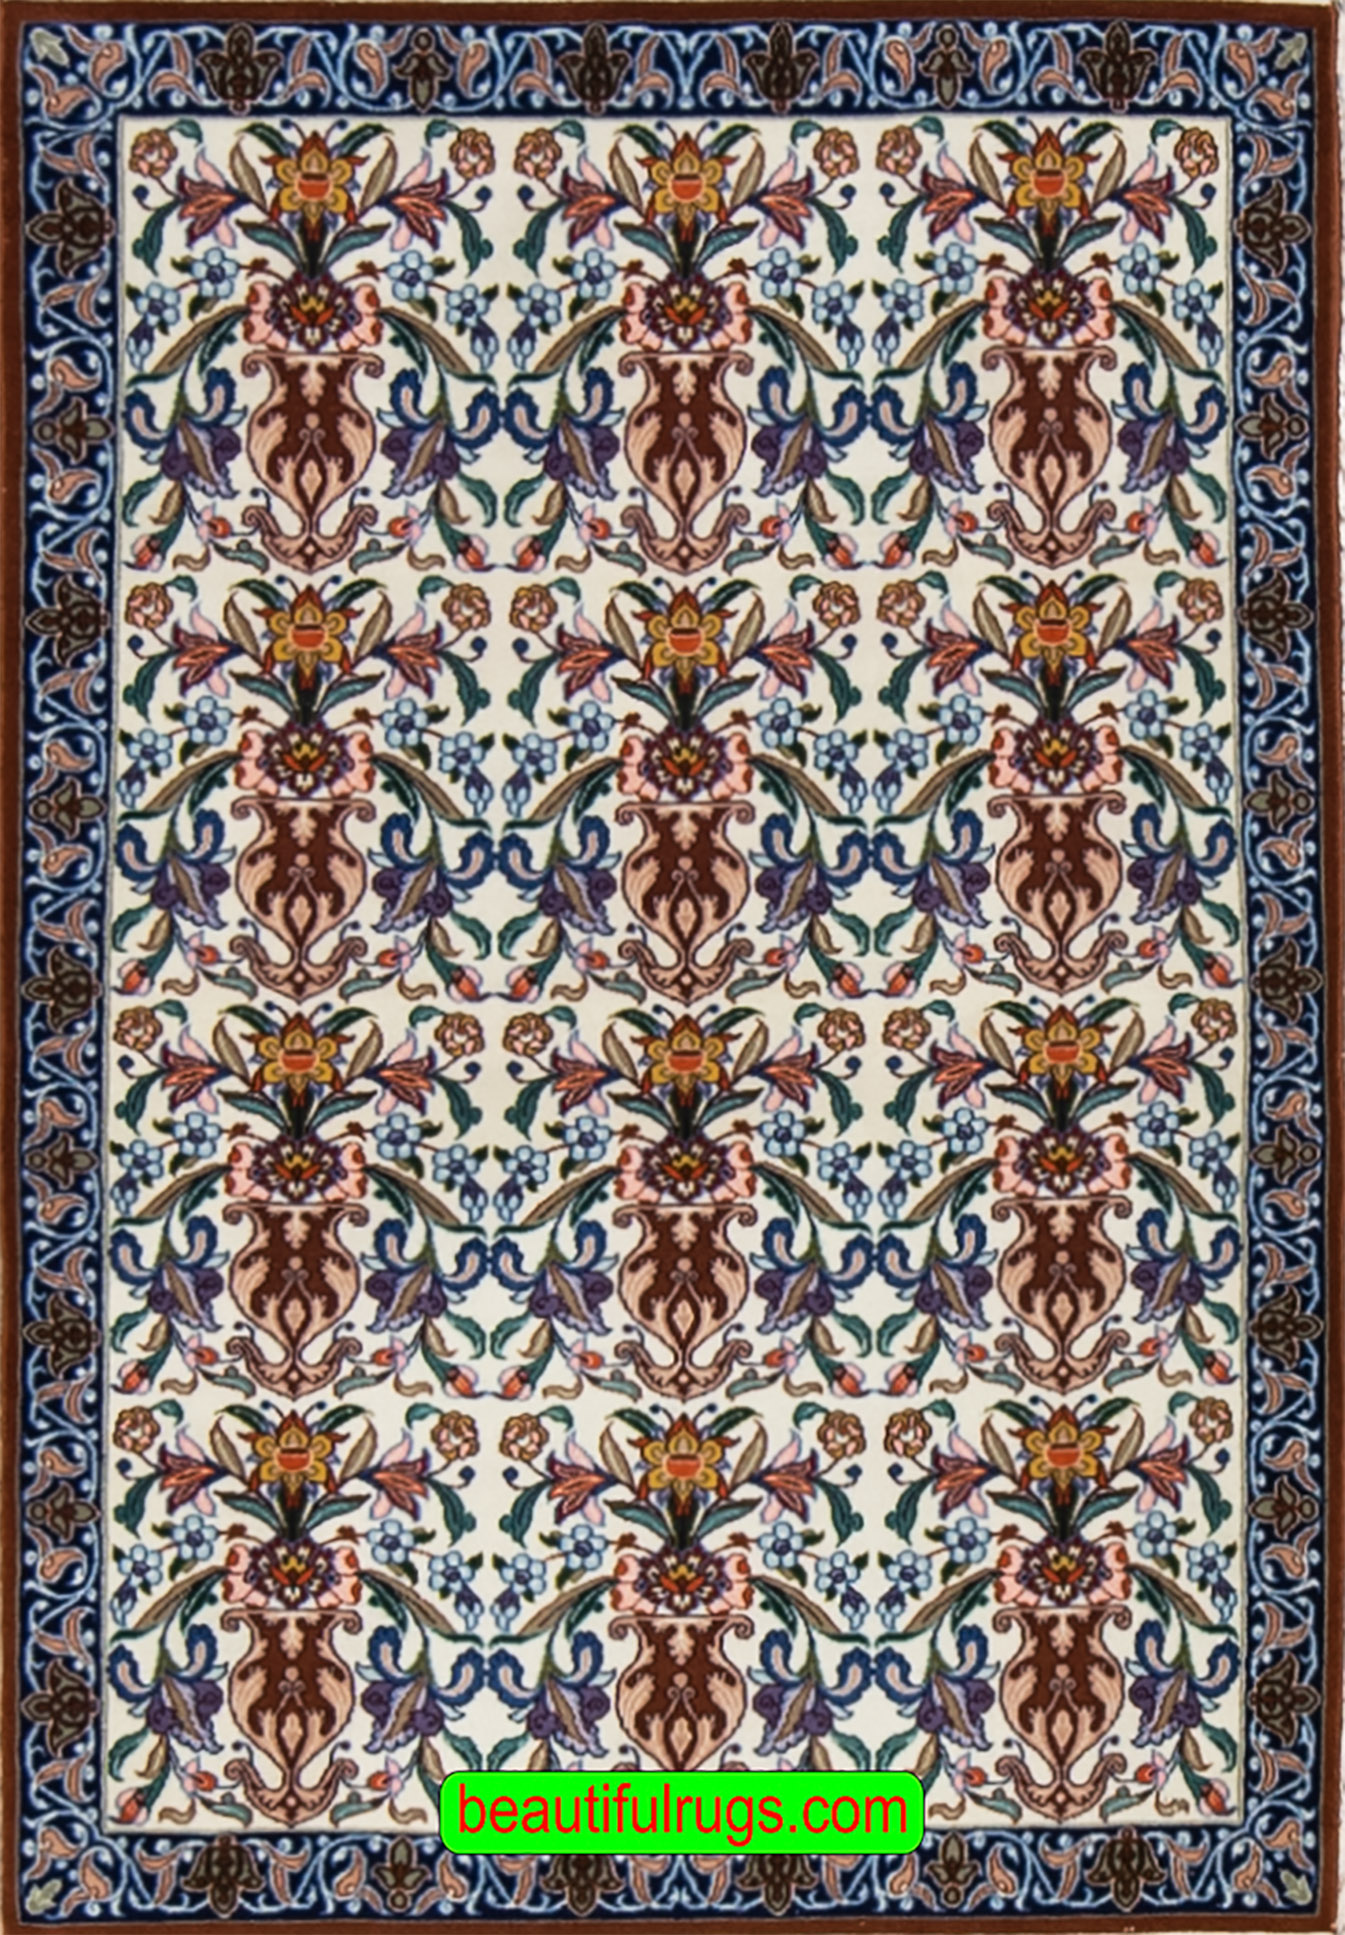 Handmade Persian Isfahan kork wool and silk rug in beige color. Size 2.8x4.